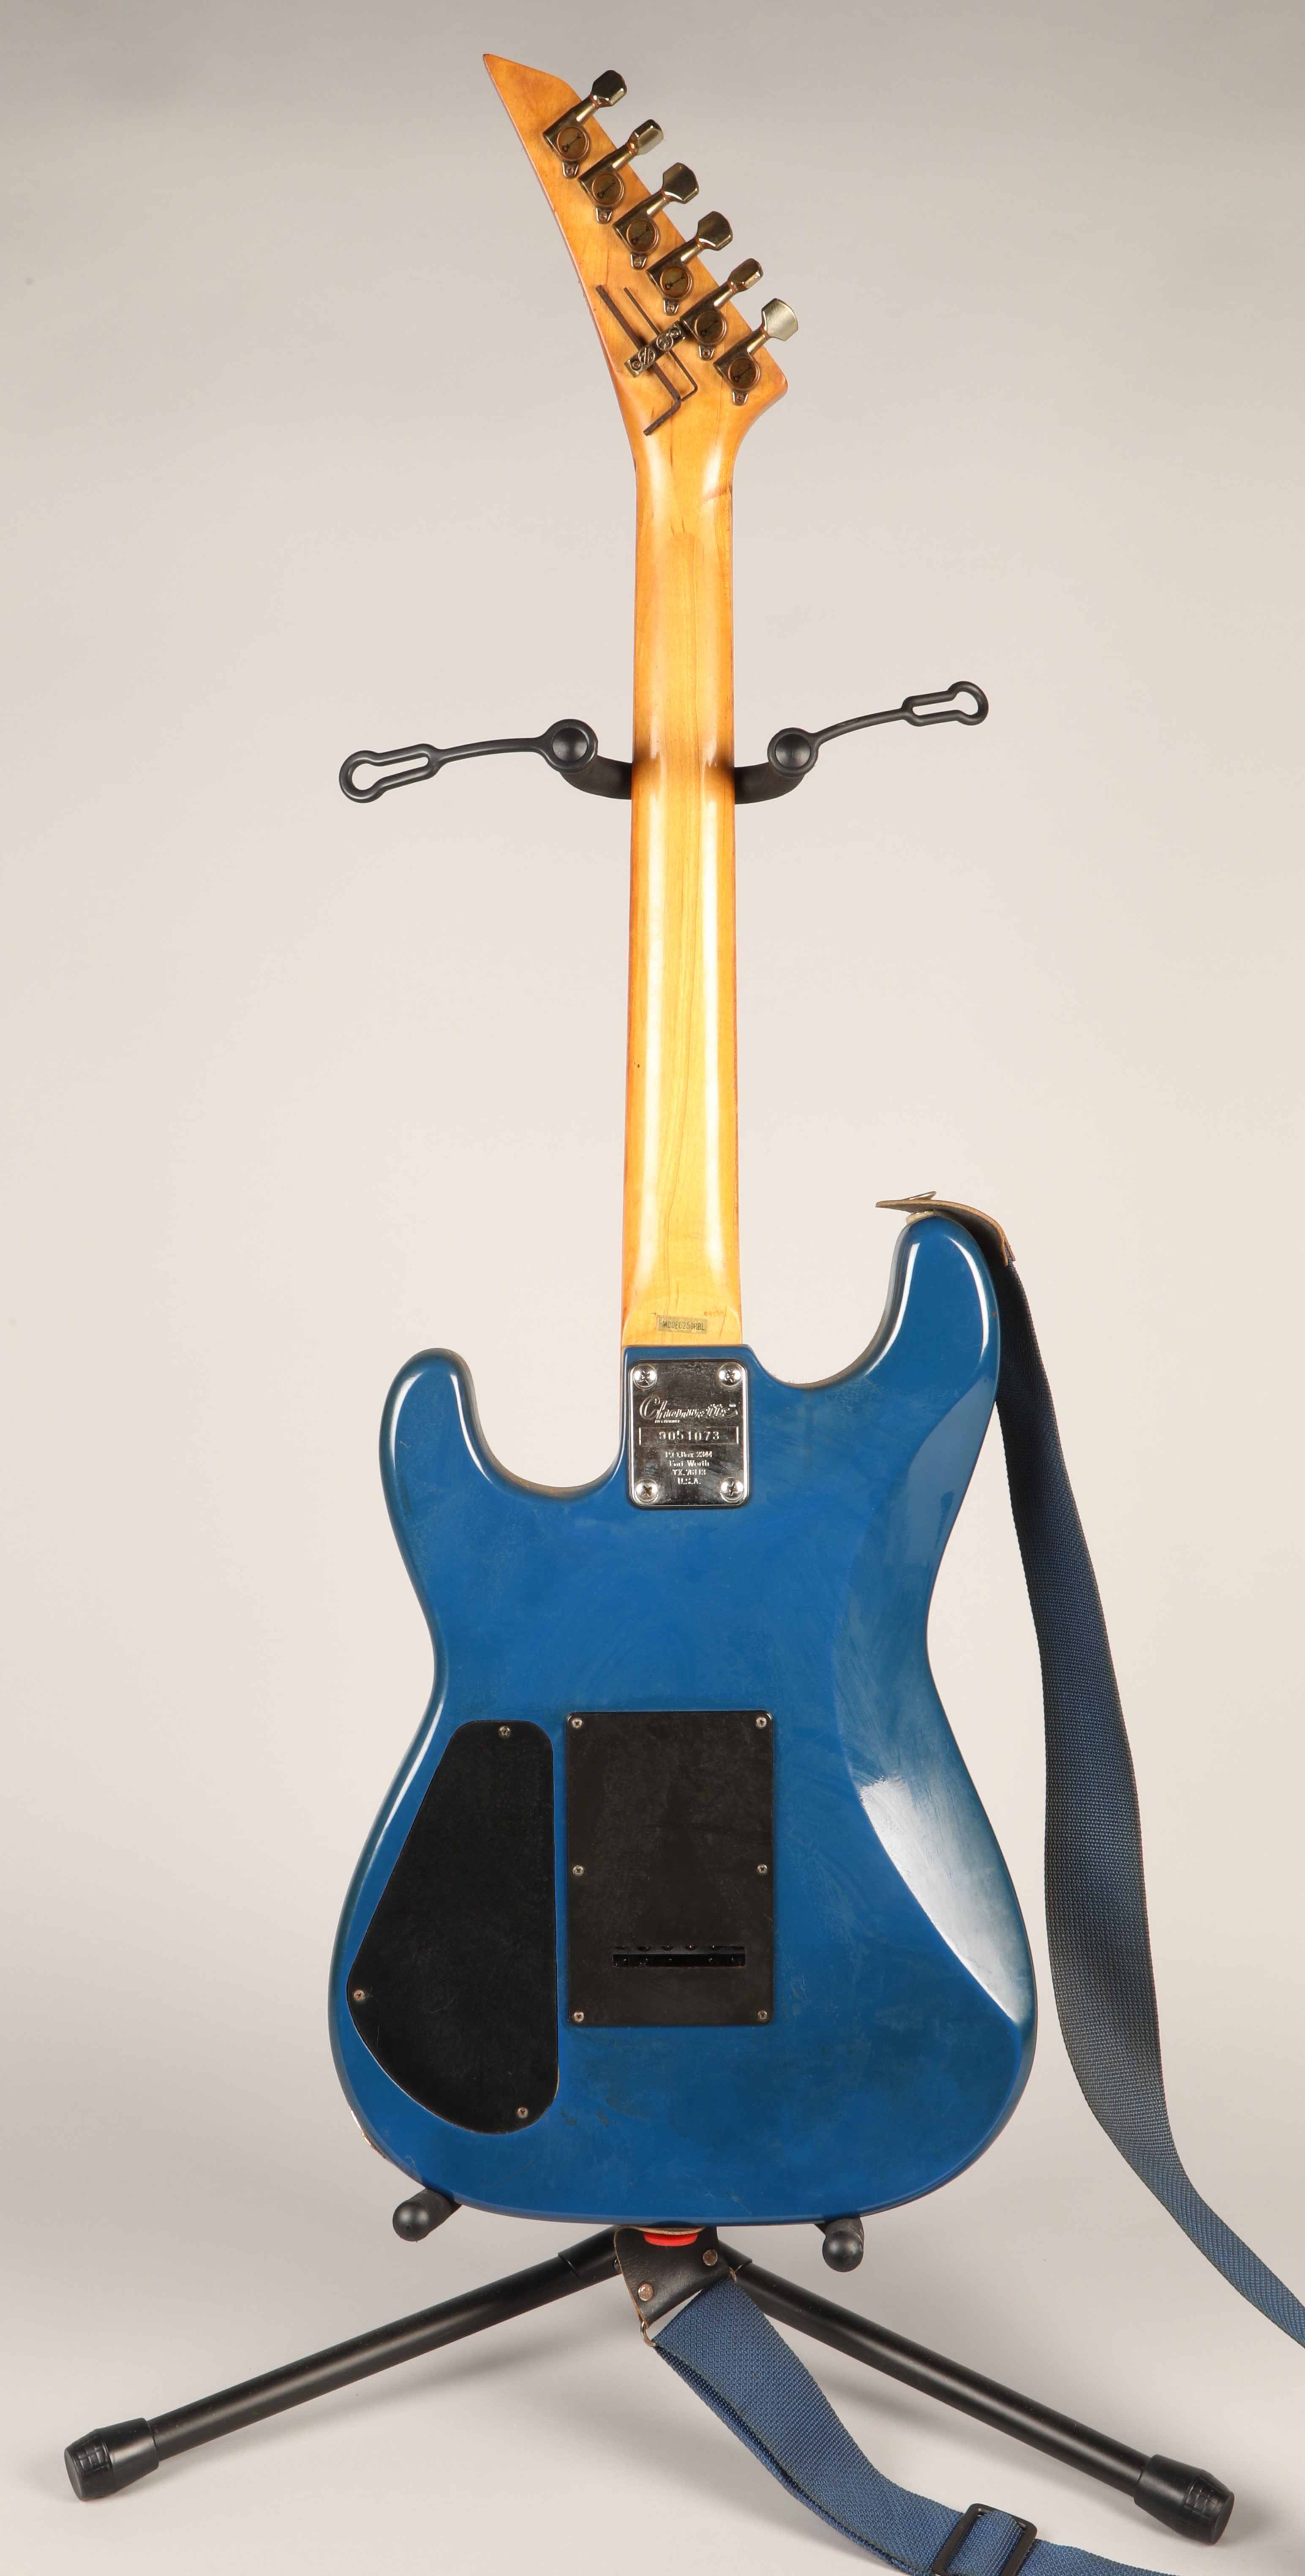 Charvette Charvel blue electric guitar, - Image 4 of 5